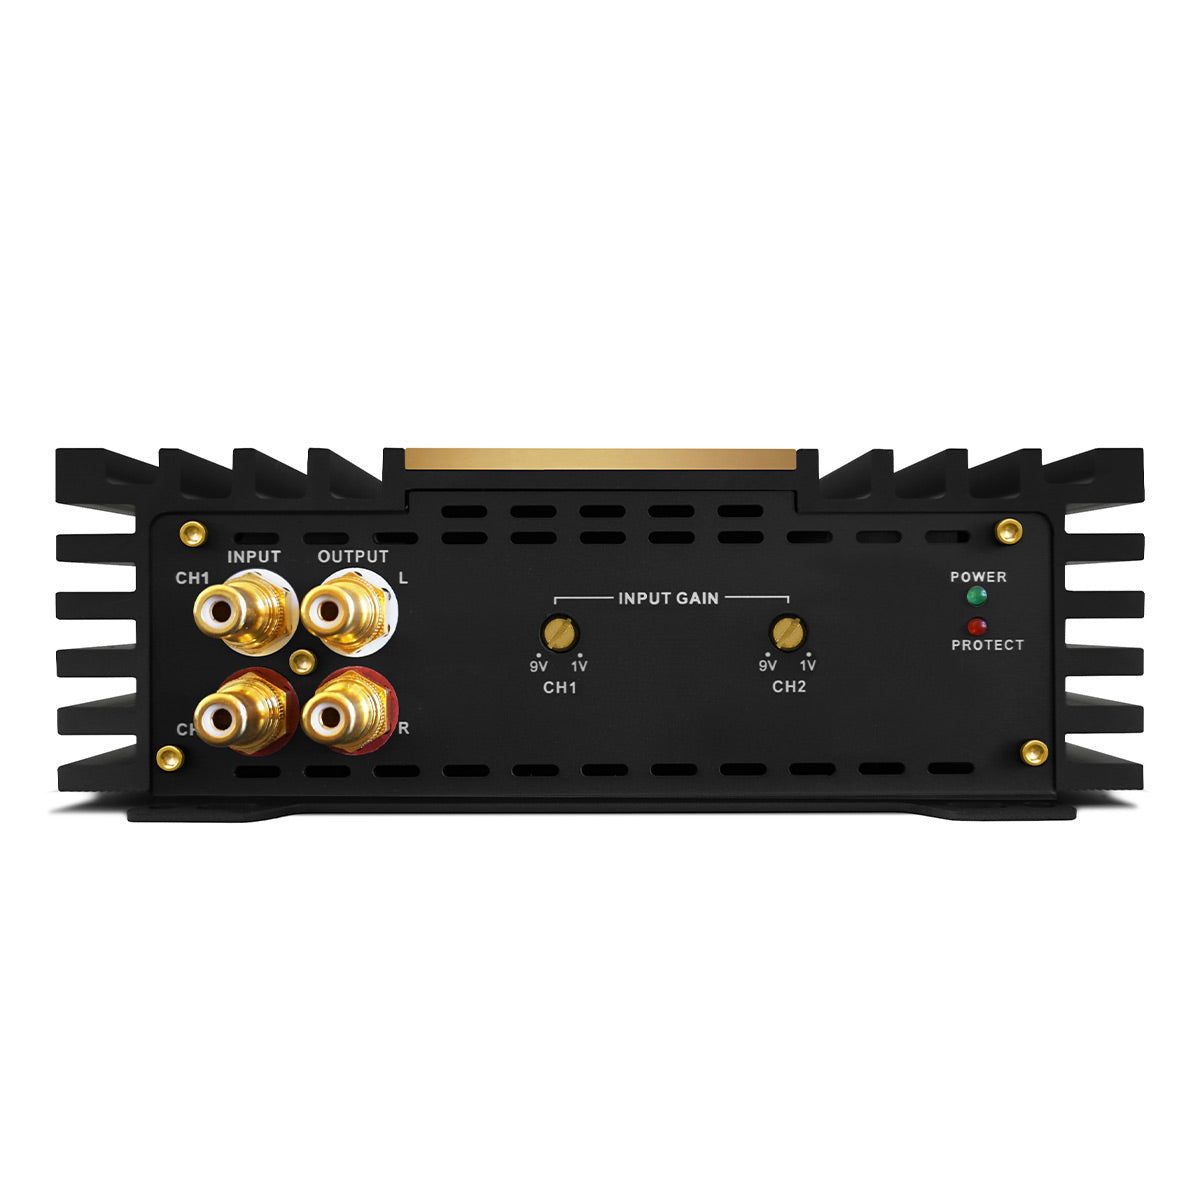 Zapco Z-150.2 AP 2-Channel Class AB Audiophile Amplifier